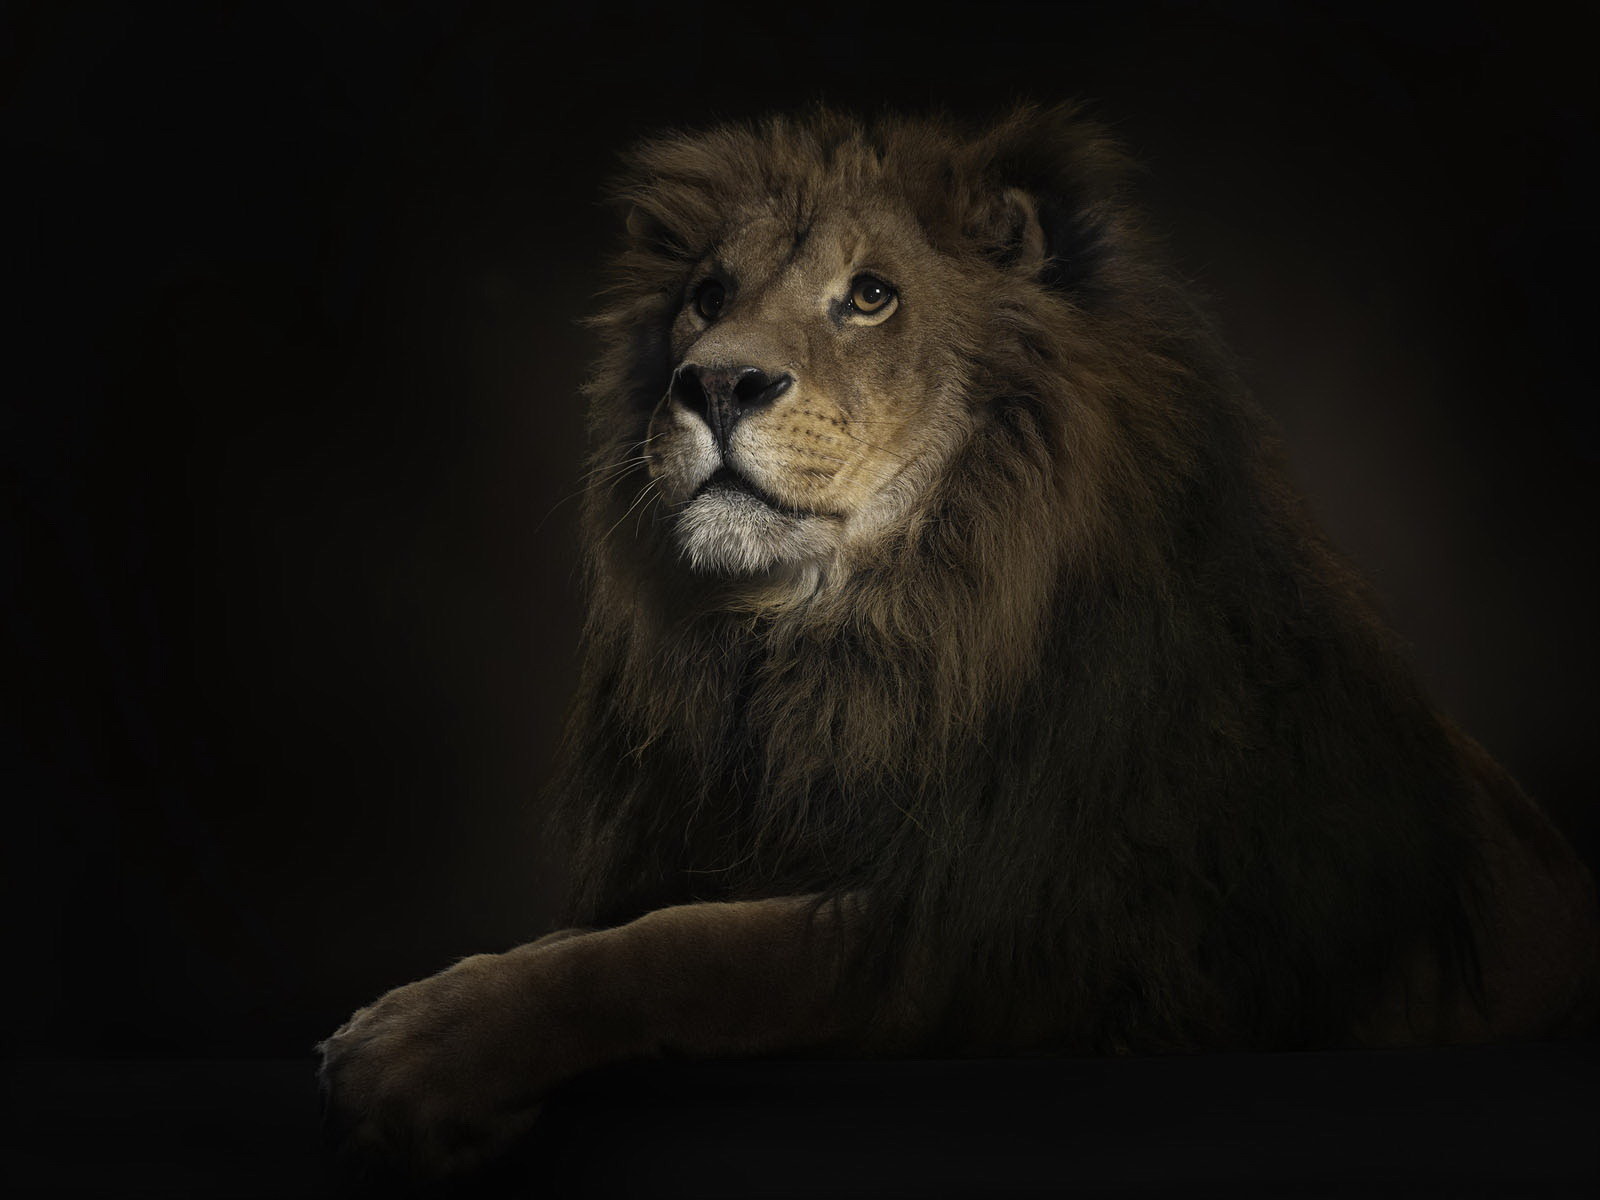 lions, animals, art photo, black